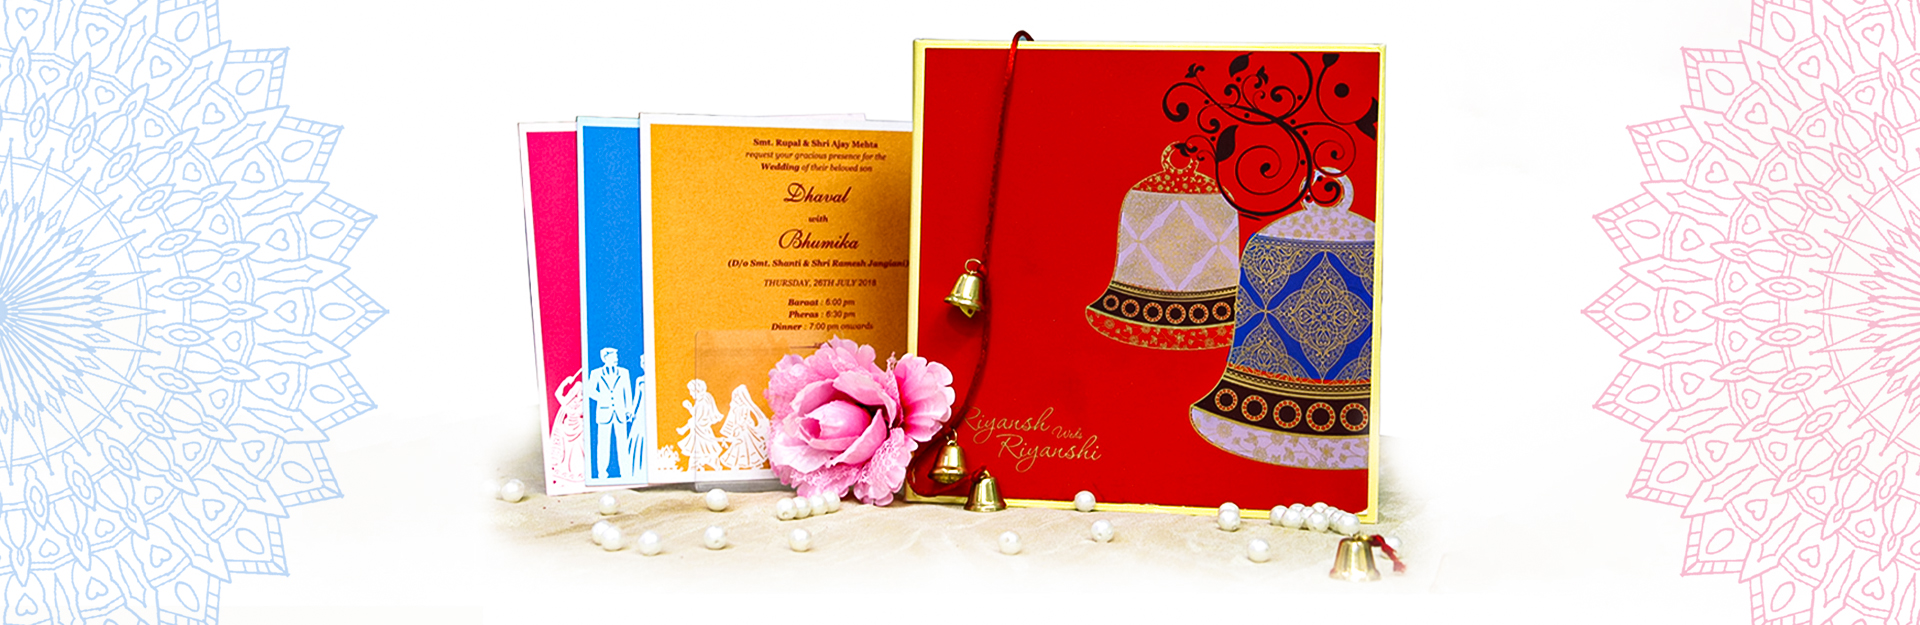 Best Wedding Card Designer shop in Ahmedabad - Card Palace